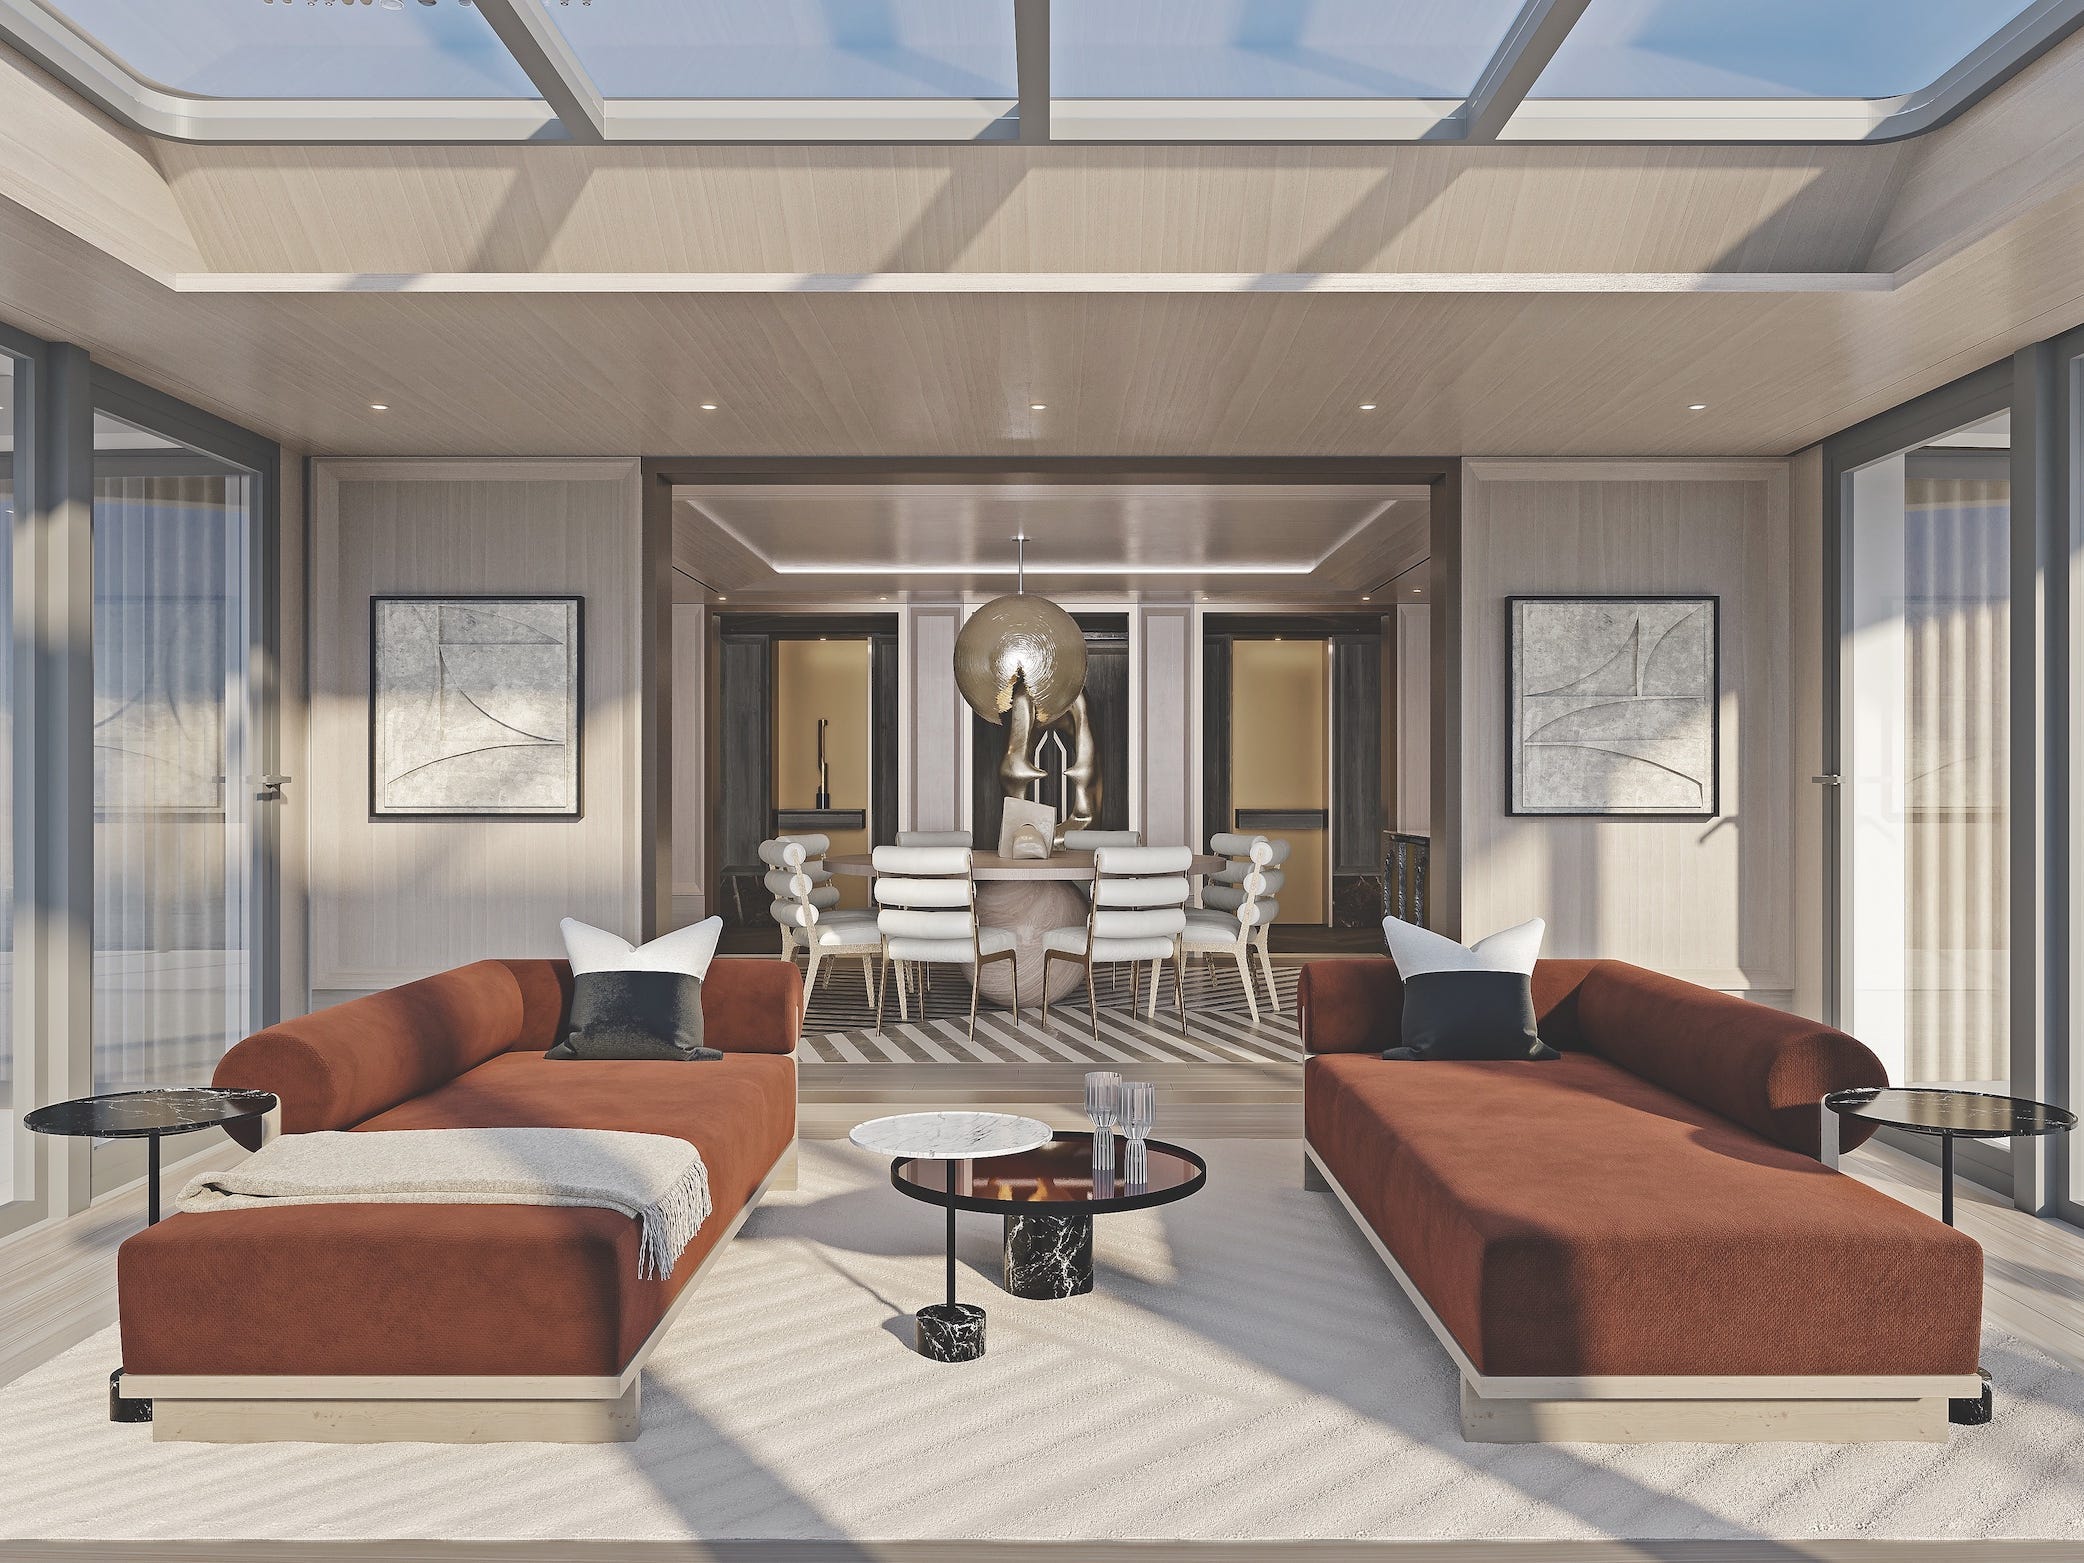 Seven Seas Grandeur's Regent Suite's living space